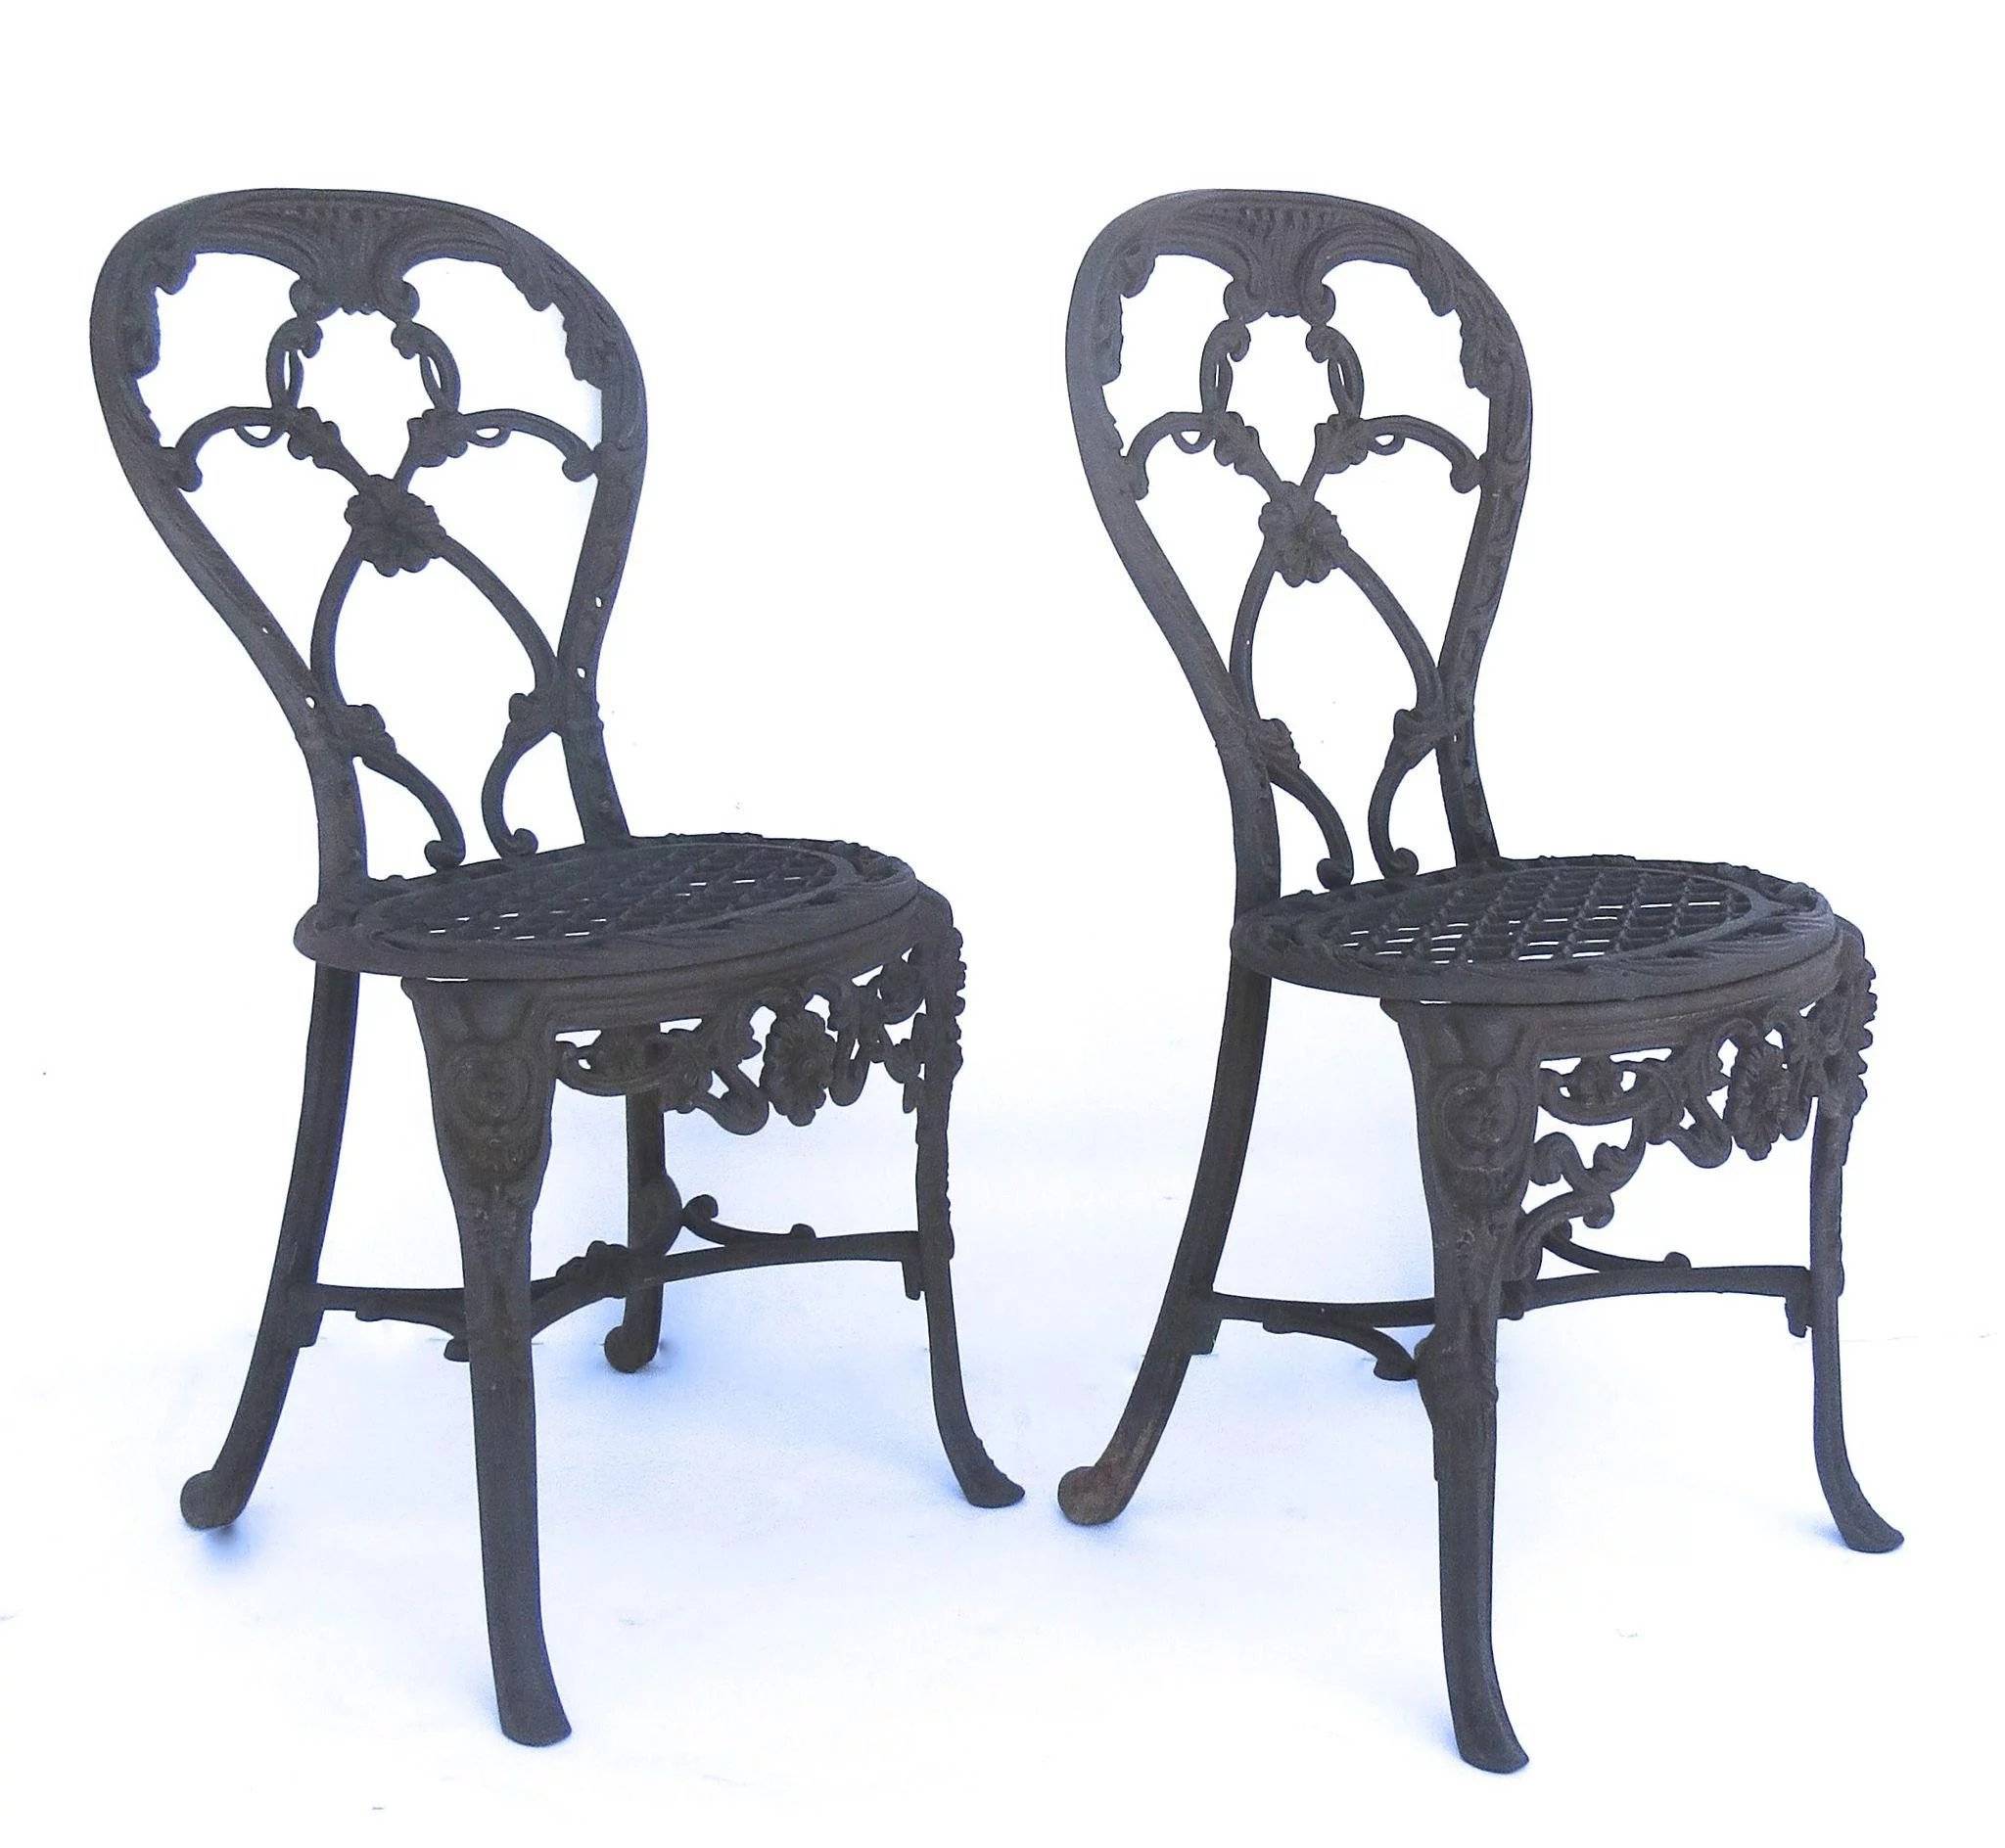 Black Wrought Iron Slat Patio Chair